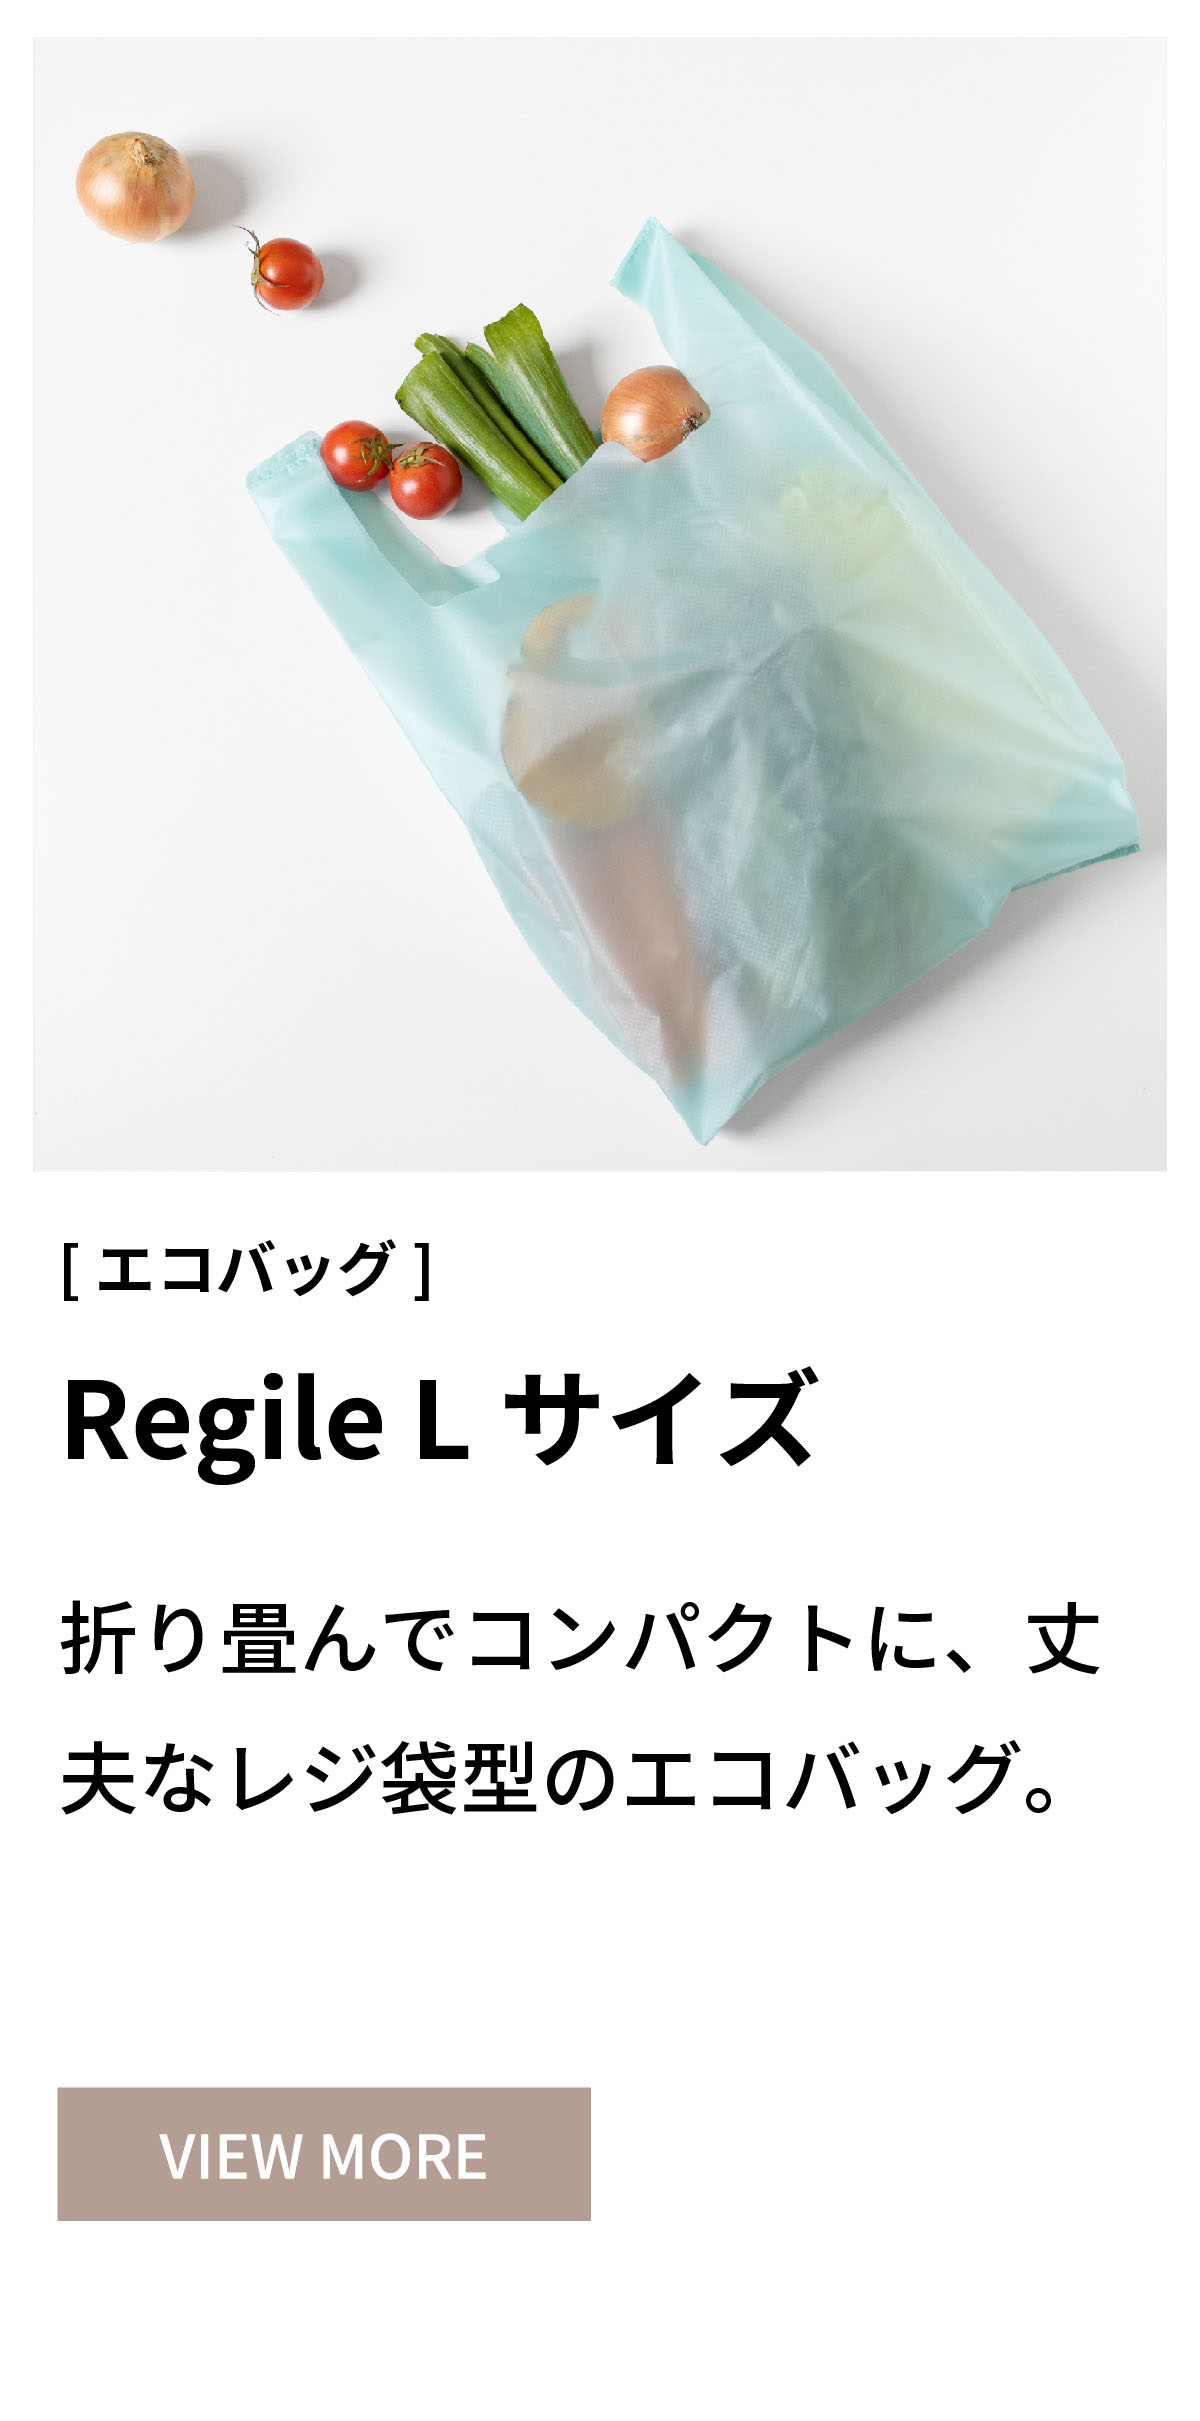 Regile エコバッグ 耐水素材